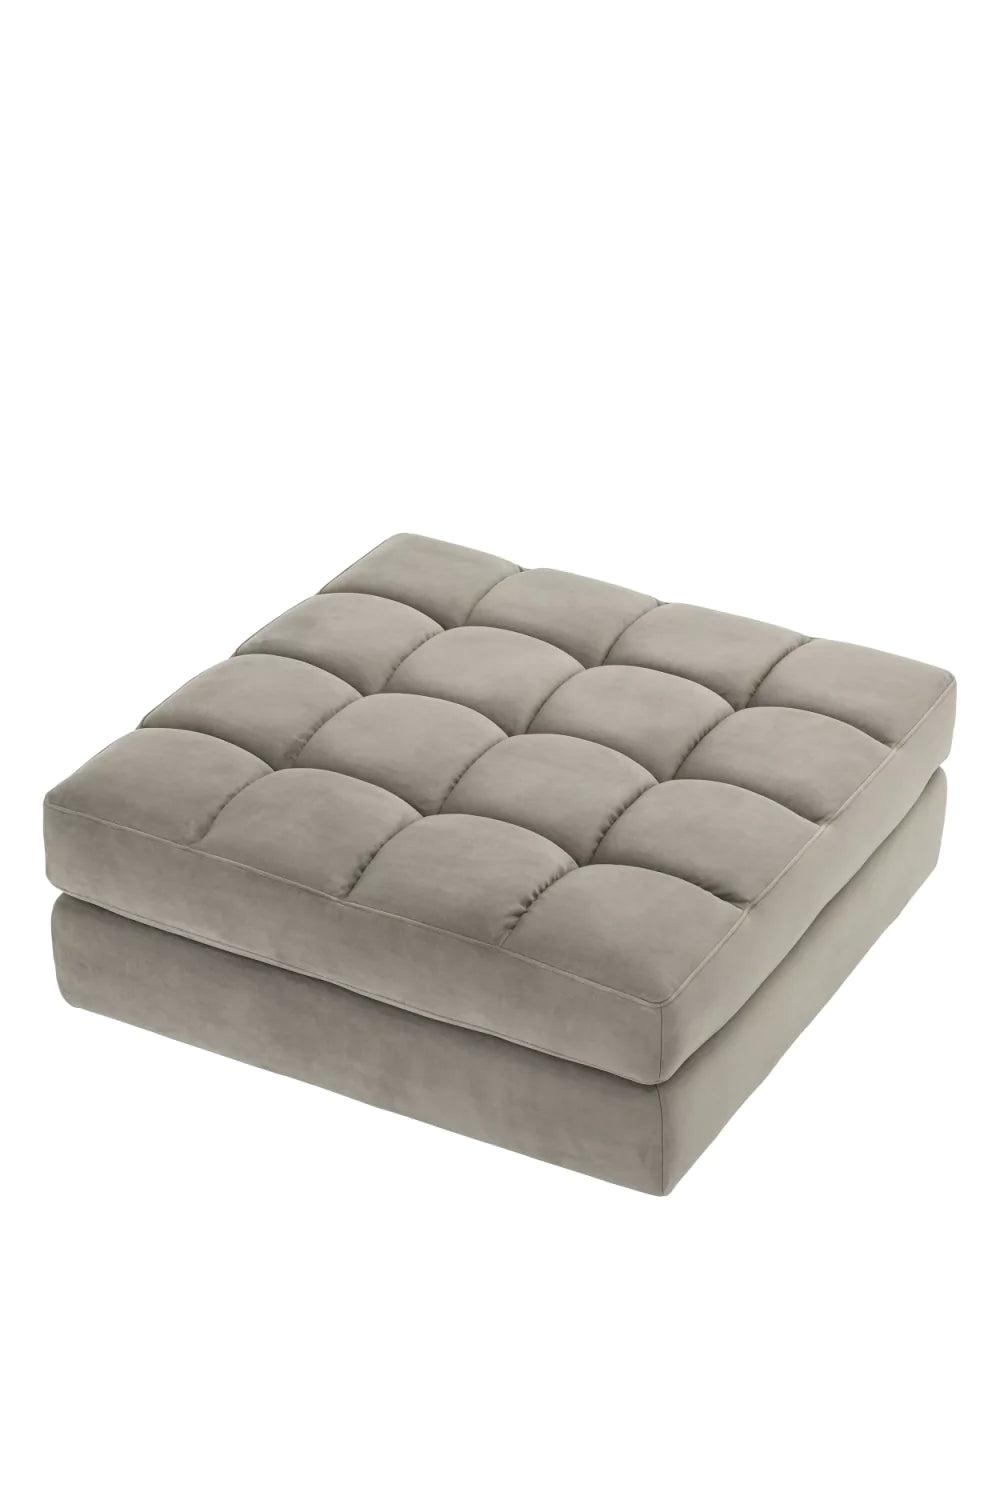 Greige Velvet Modular Sofa | Eichholtz Dean | Oroa.com